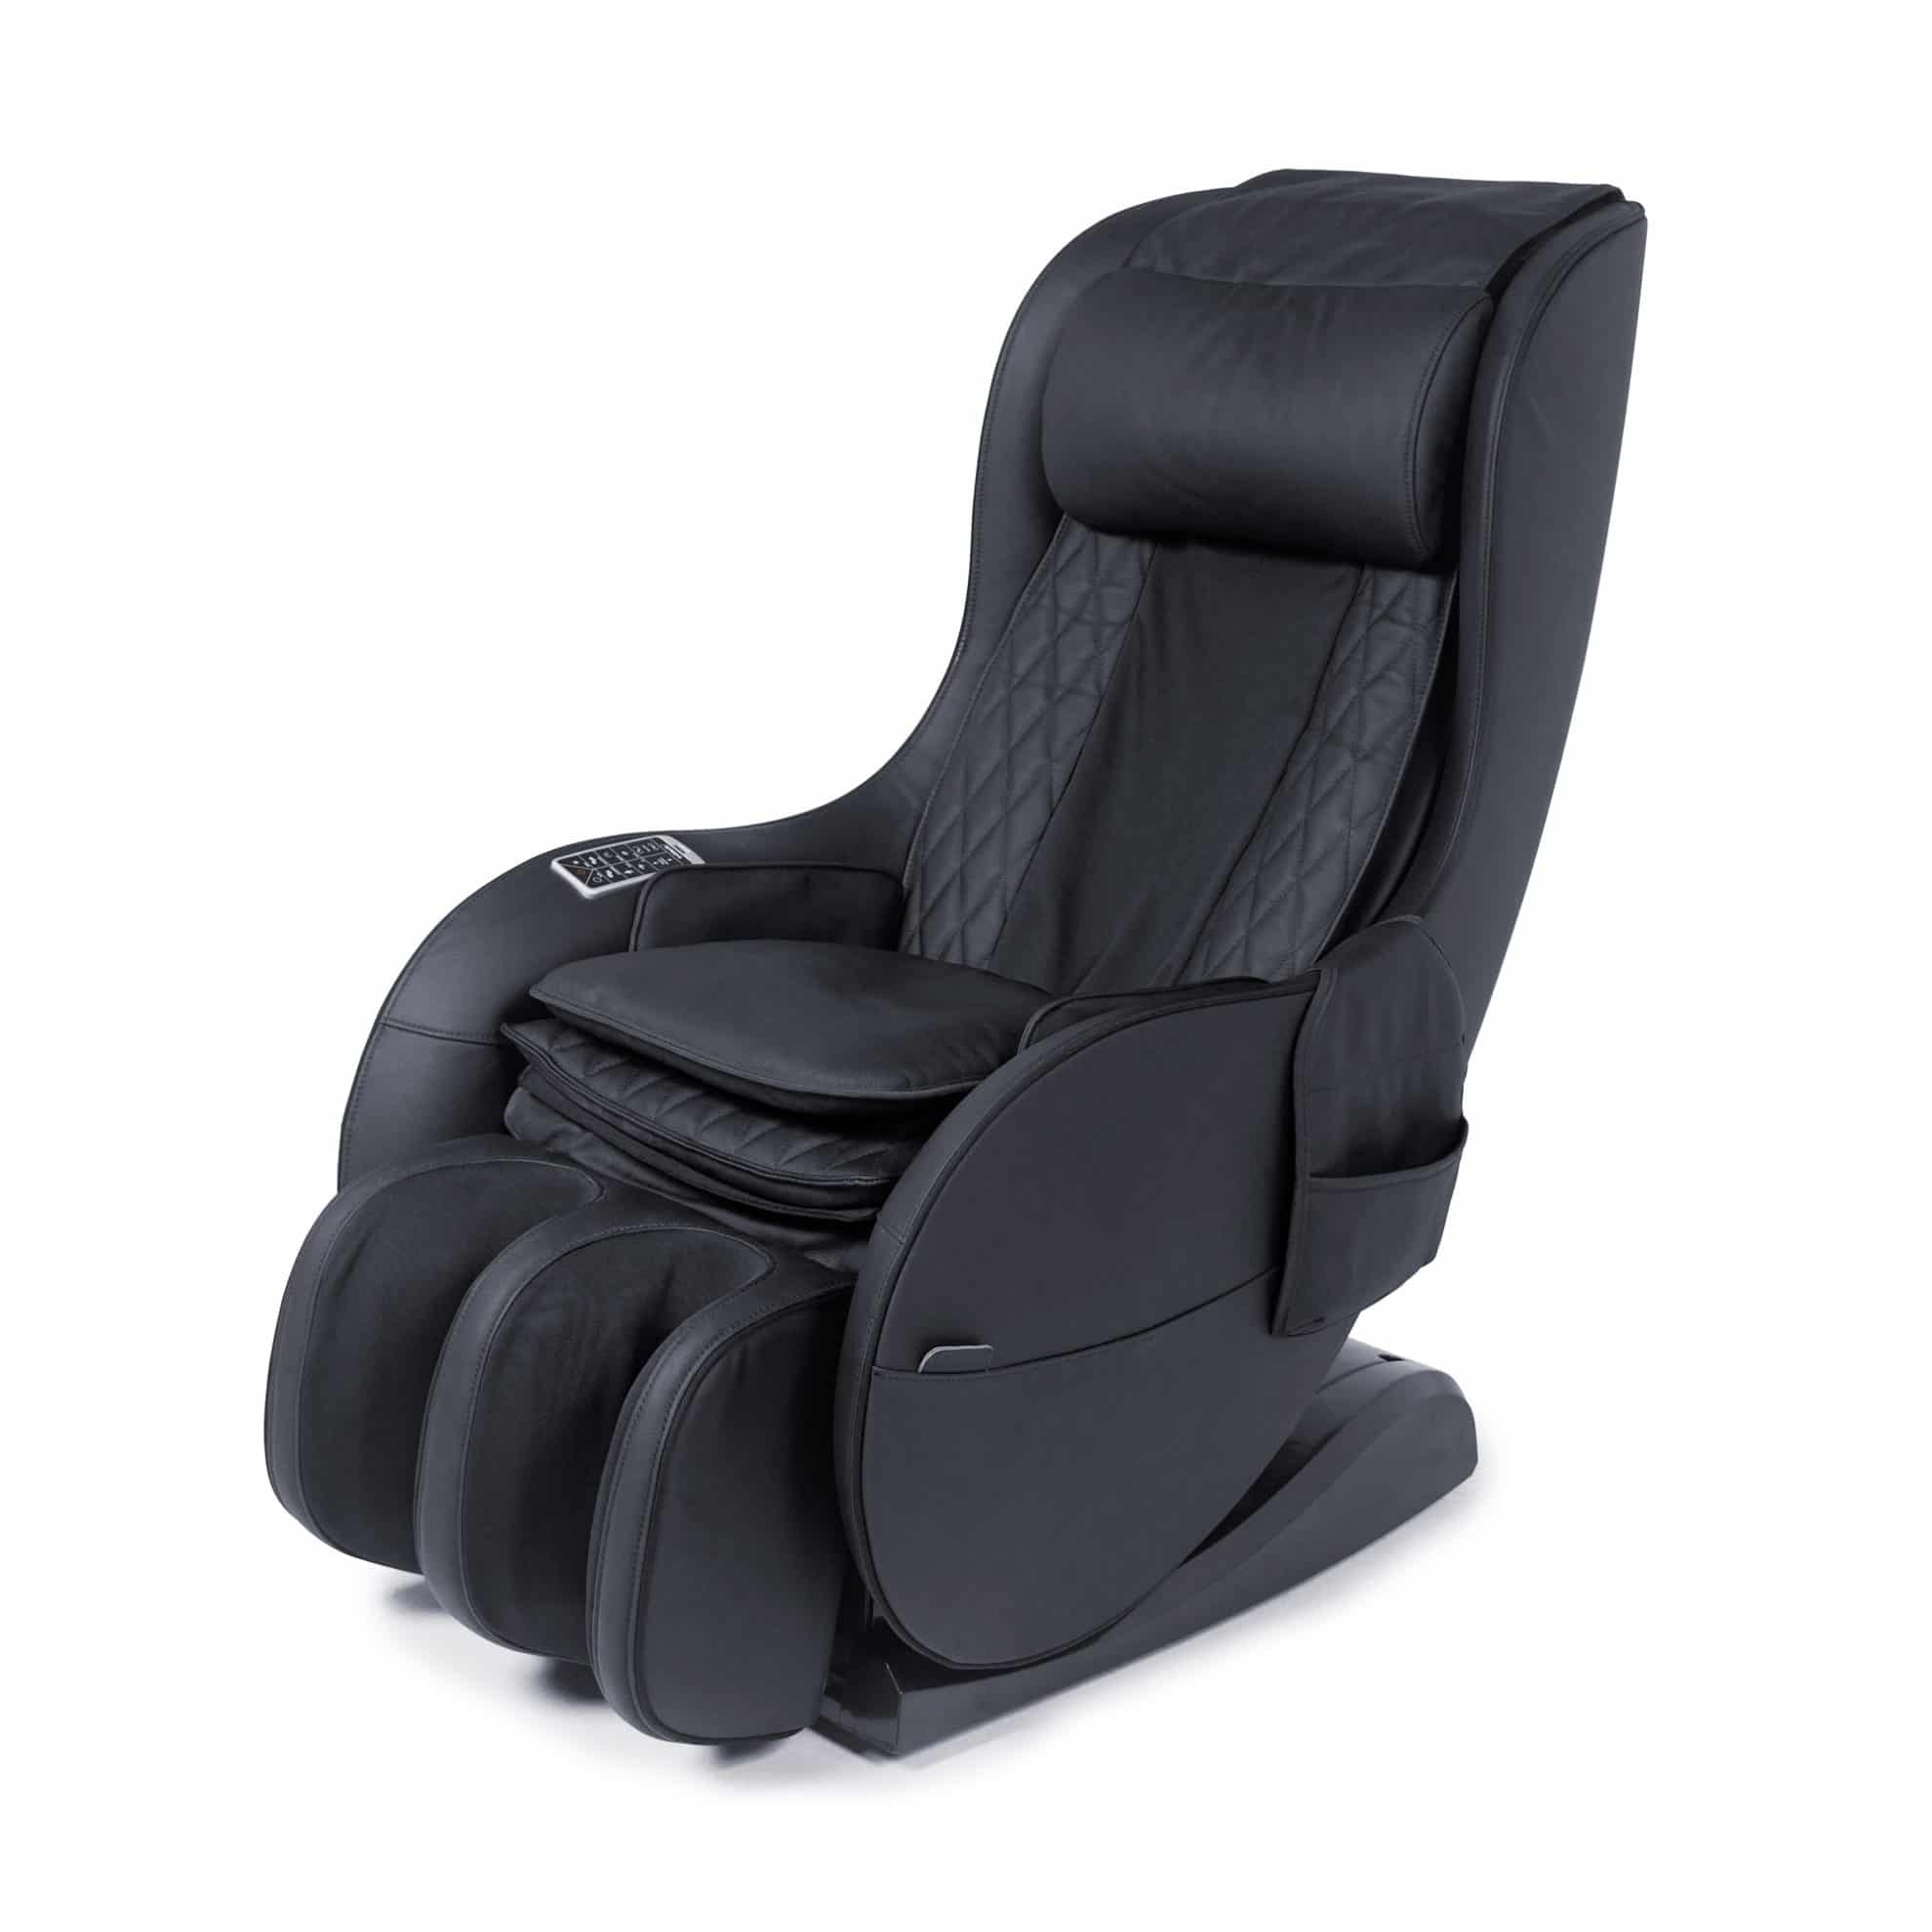 Trumedic Instashiatsu Mc 750 Massage Chair 699 99 Costco W Free